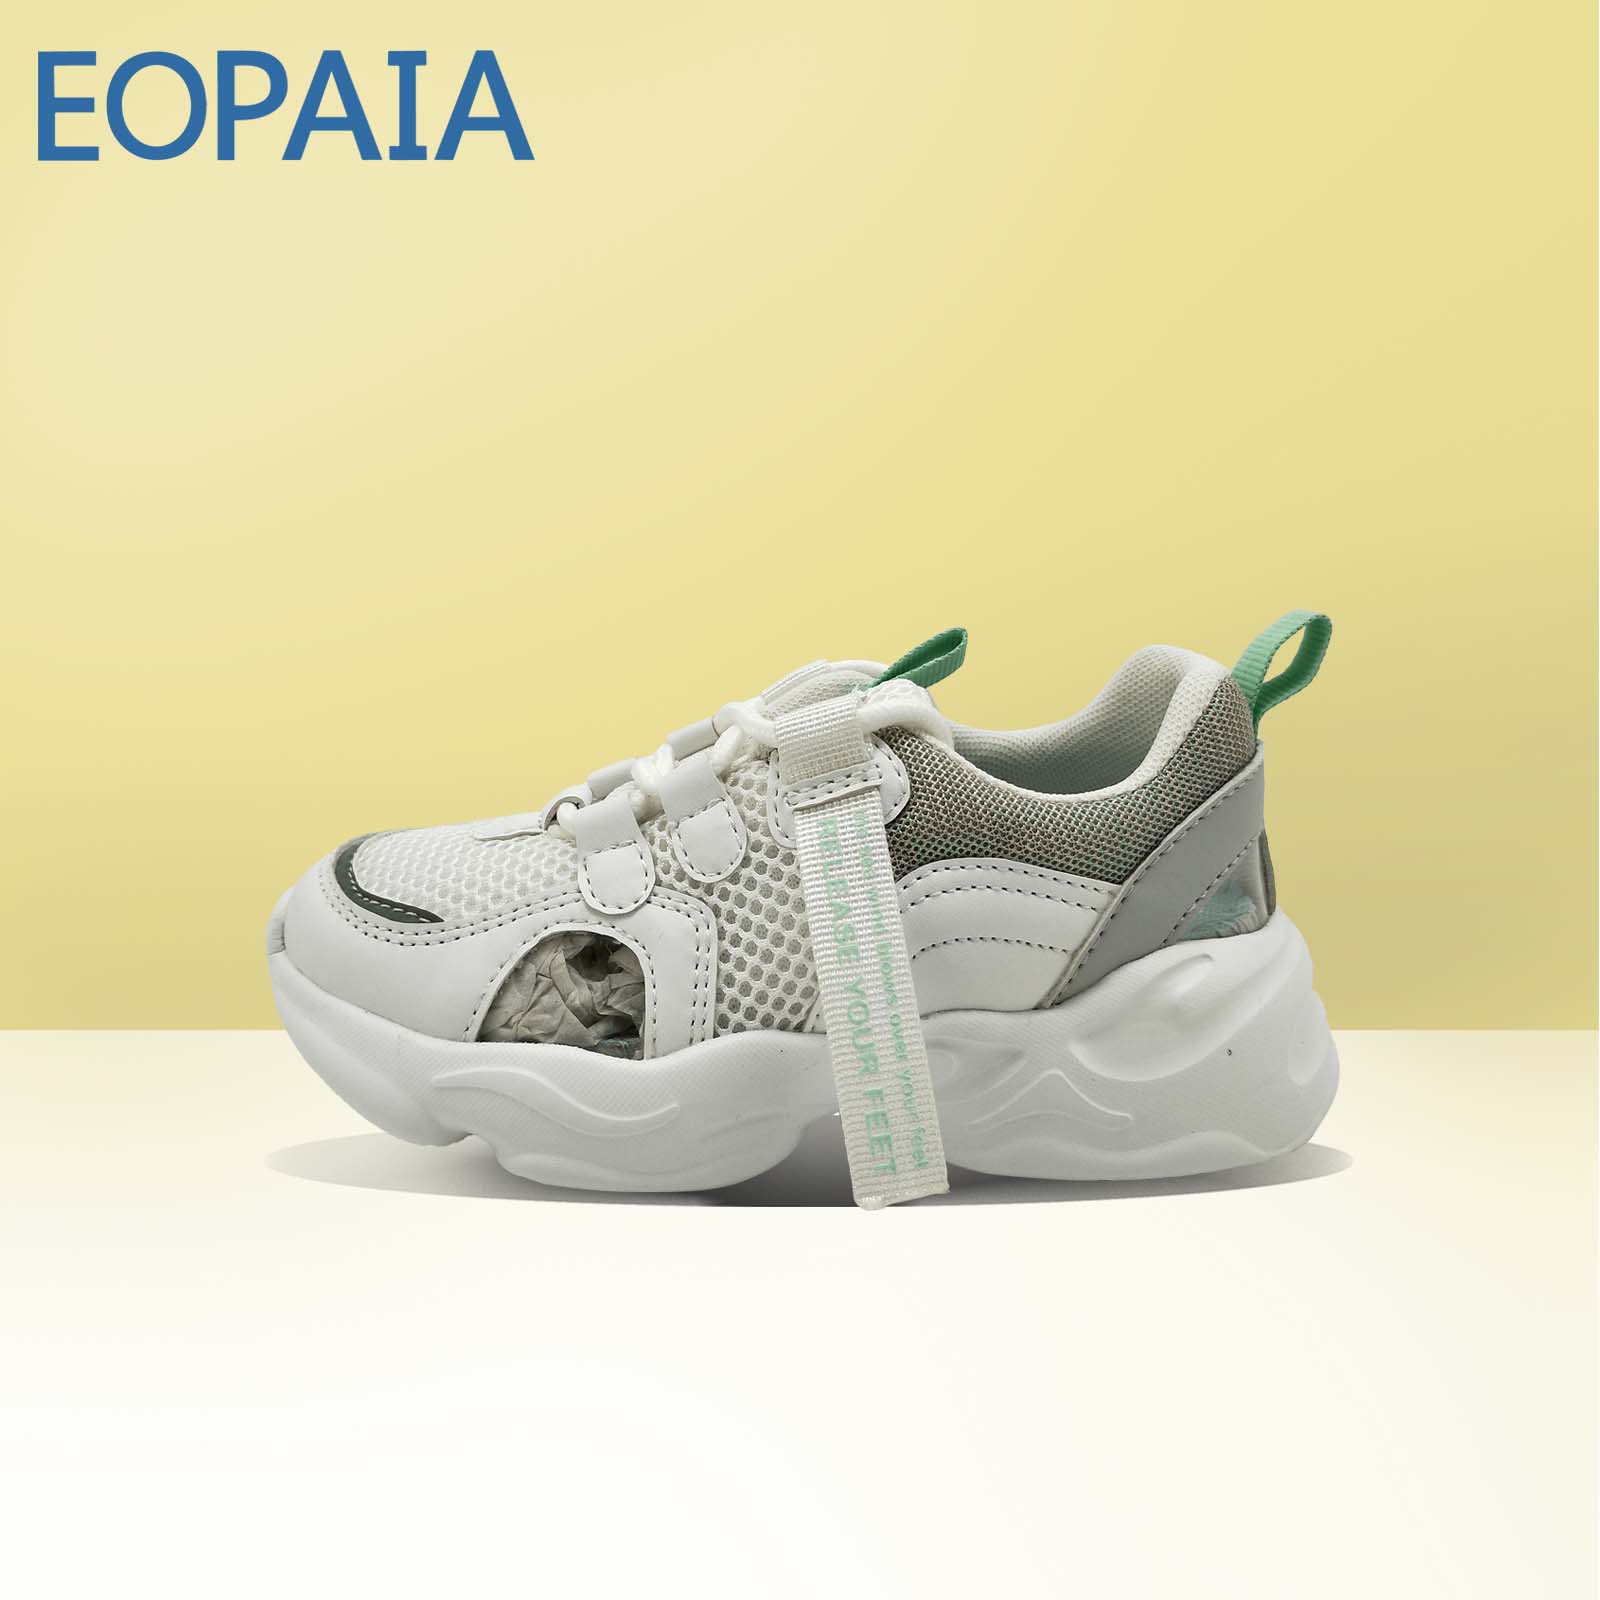 niños calzado niños zapatos casuales zapatos para niños zapatos deportivos zapatos de entrenador zapatos cómodos zapatos de moda zapatos de velcro